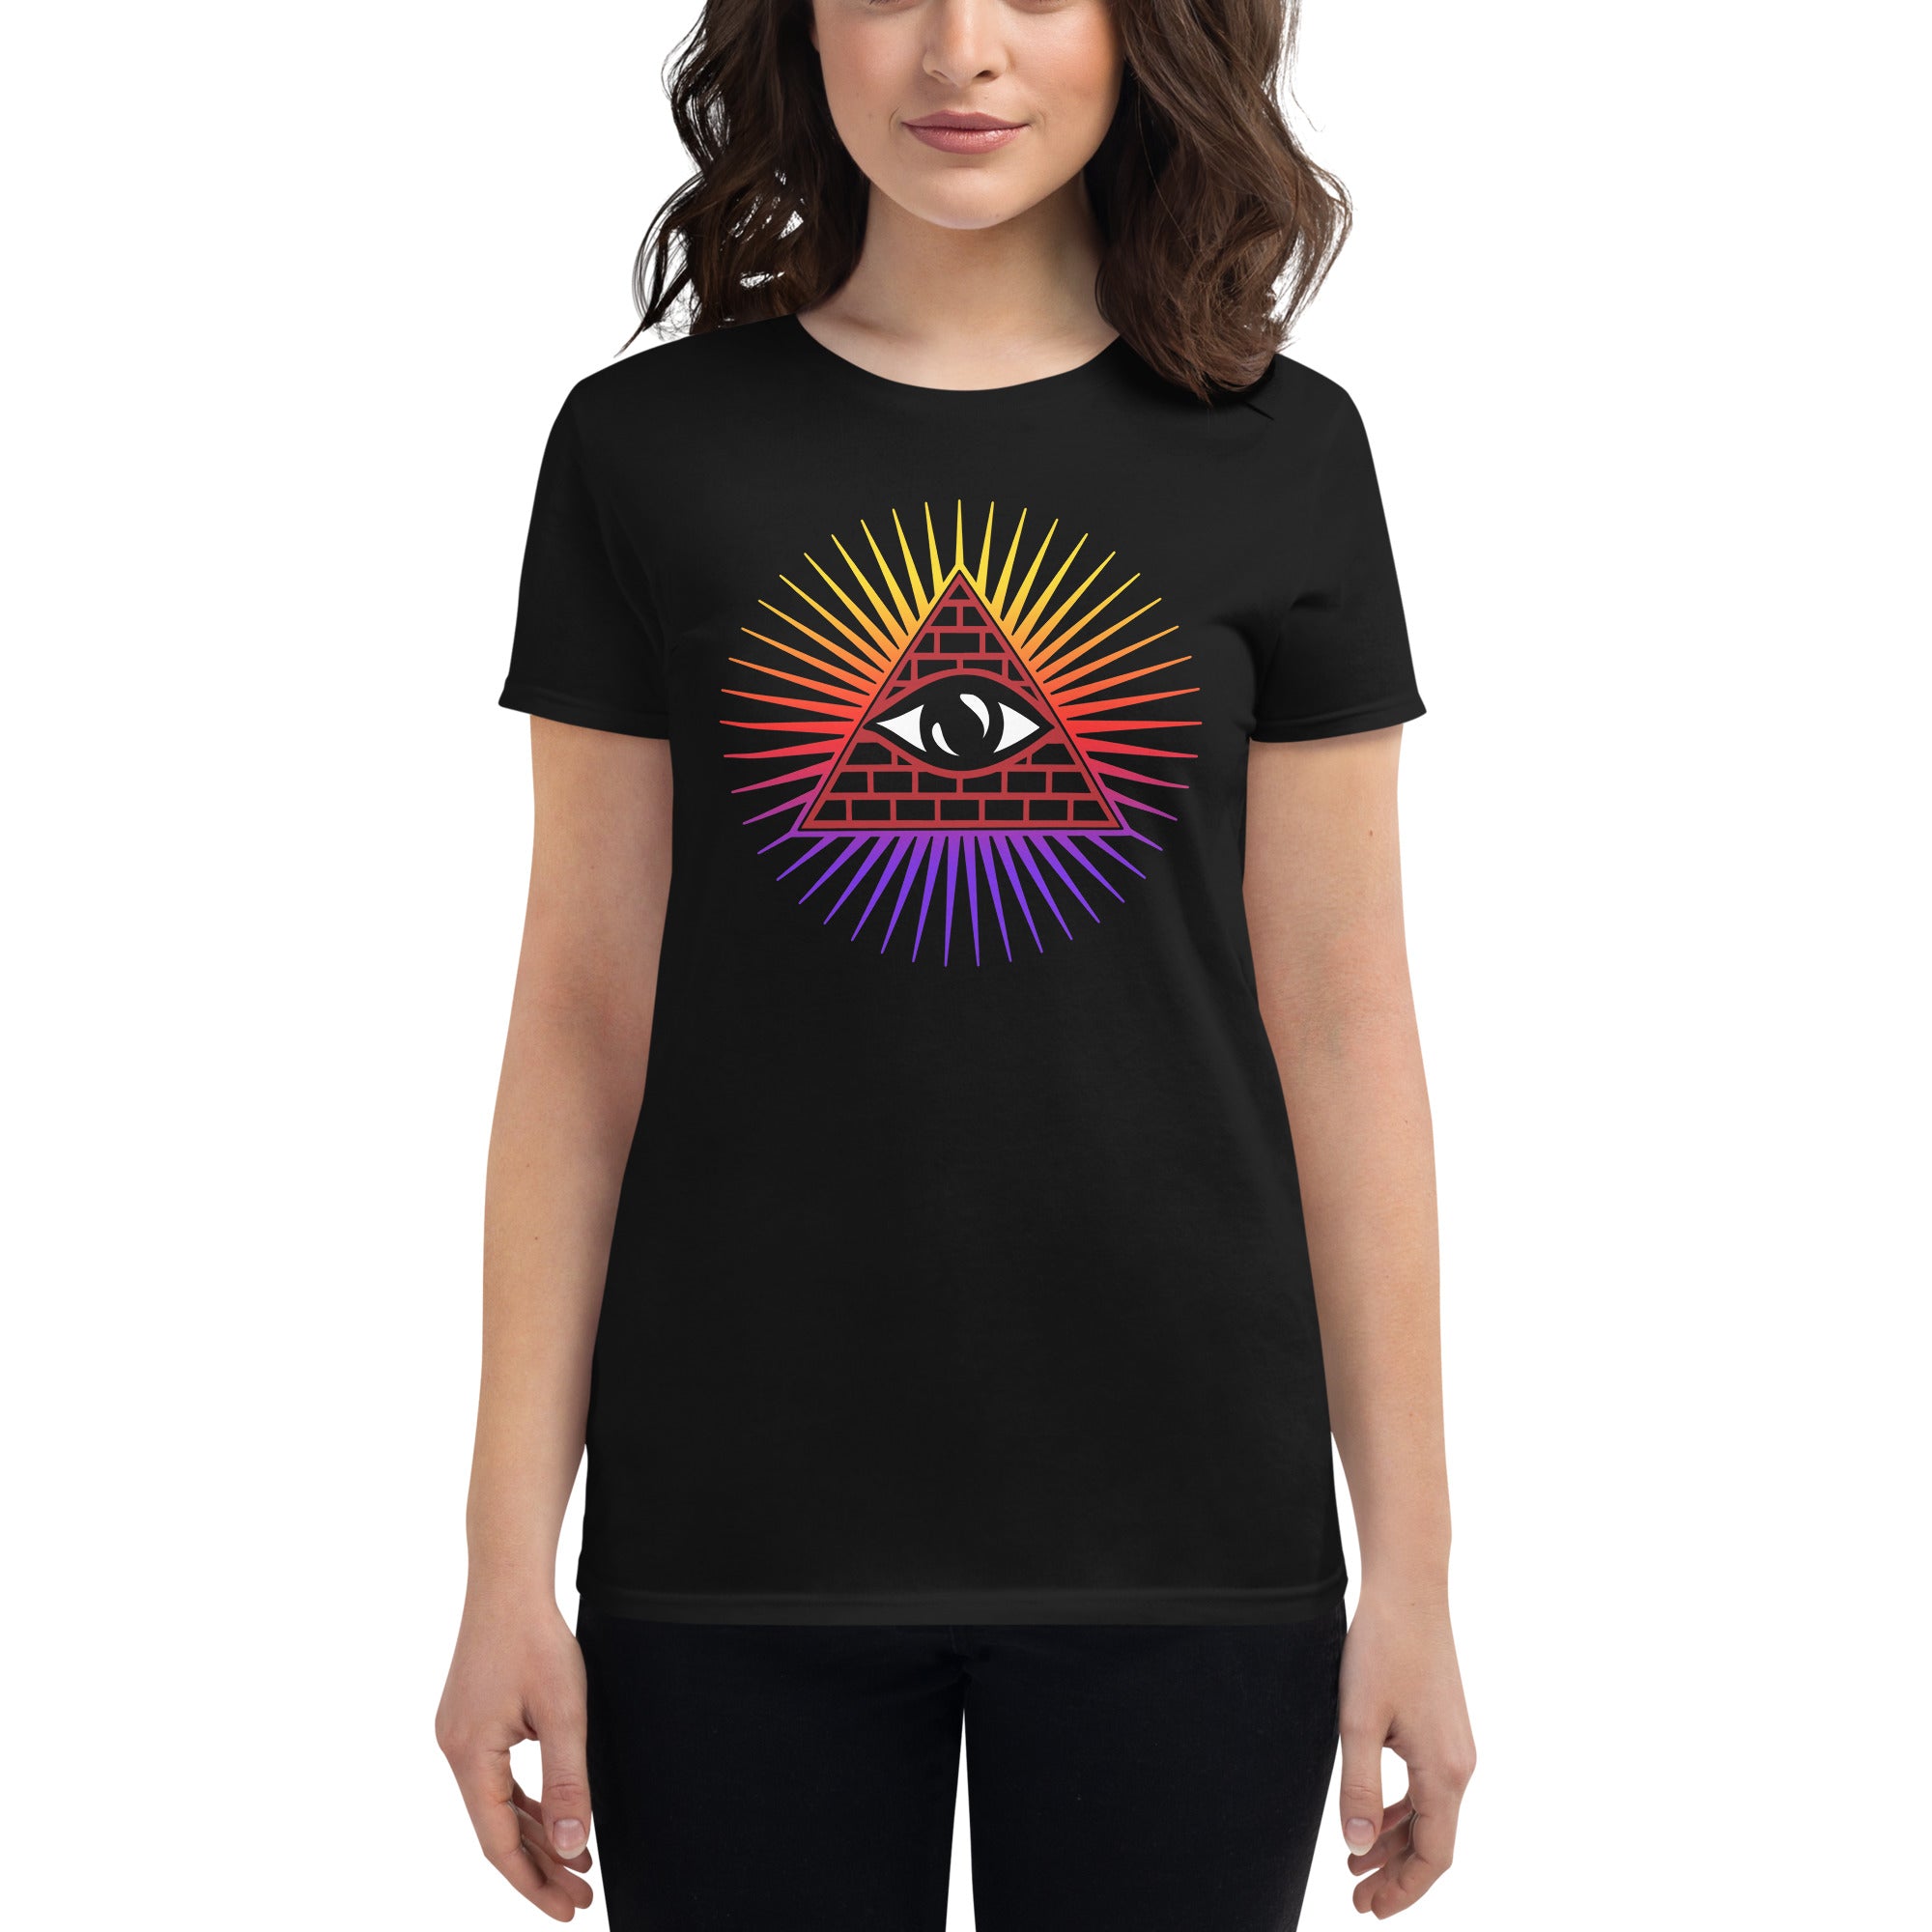 Illuminati All Seeing Psychic Eye Color Aura Women's Short Sleeve Babydoll T-shirt